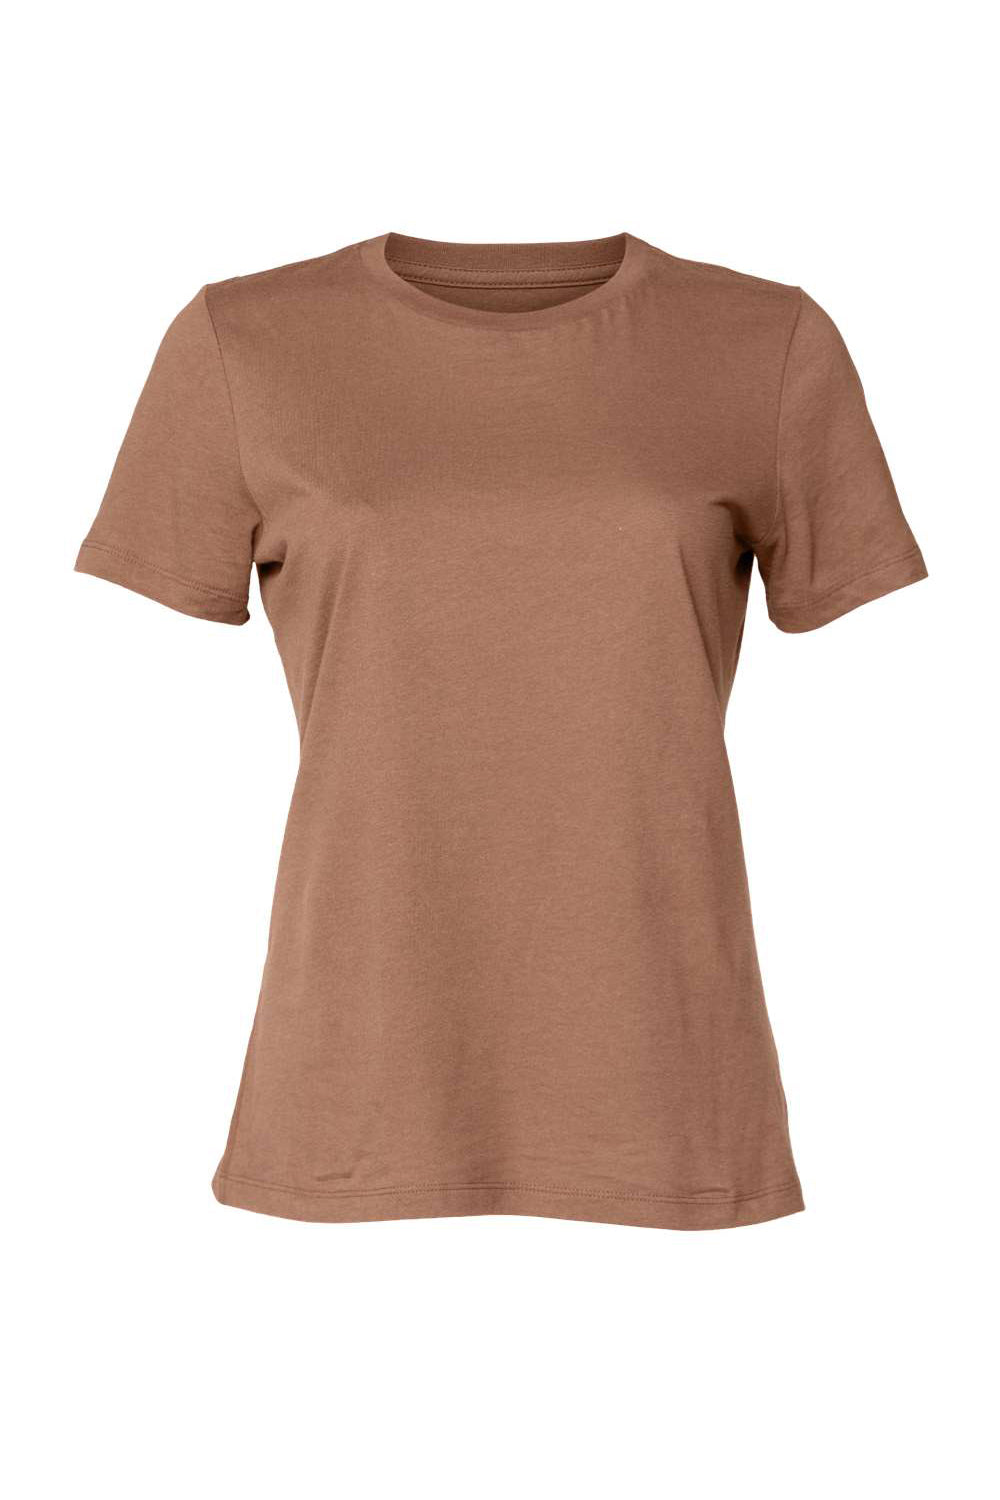 Bella + Canvas BC6400/B6400/6400 Womens Relaxed Jersey Short Sleeve Crewneck T-Shirt Chestnut Brown Flat Front